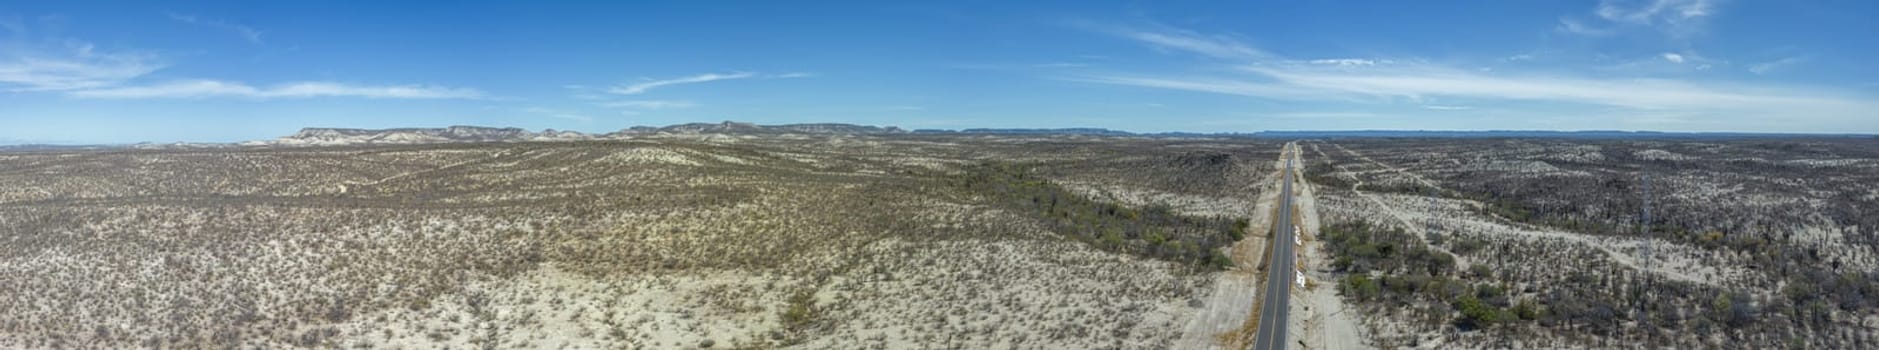 Drone Aerial view of Sierra Guadalupe Transpeninsular 1 highway in Baja California Sur, Mexico.